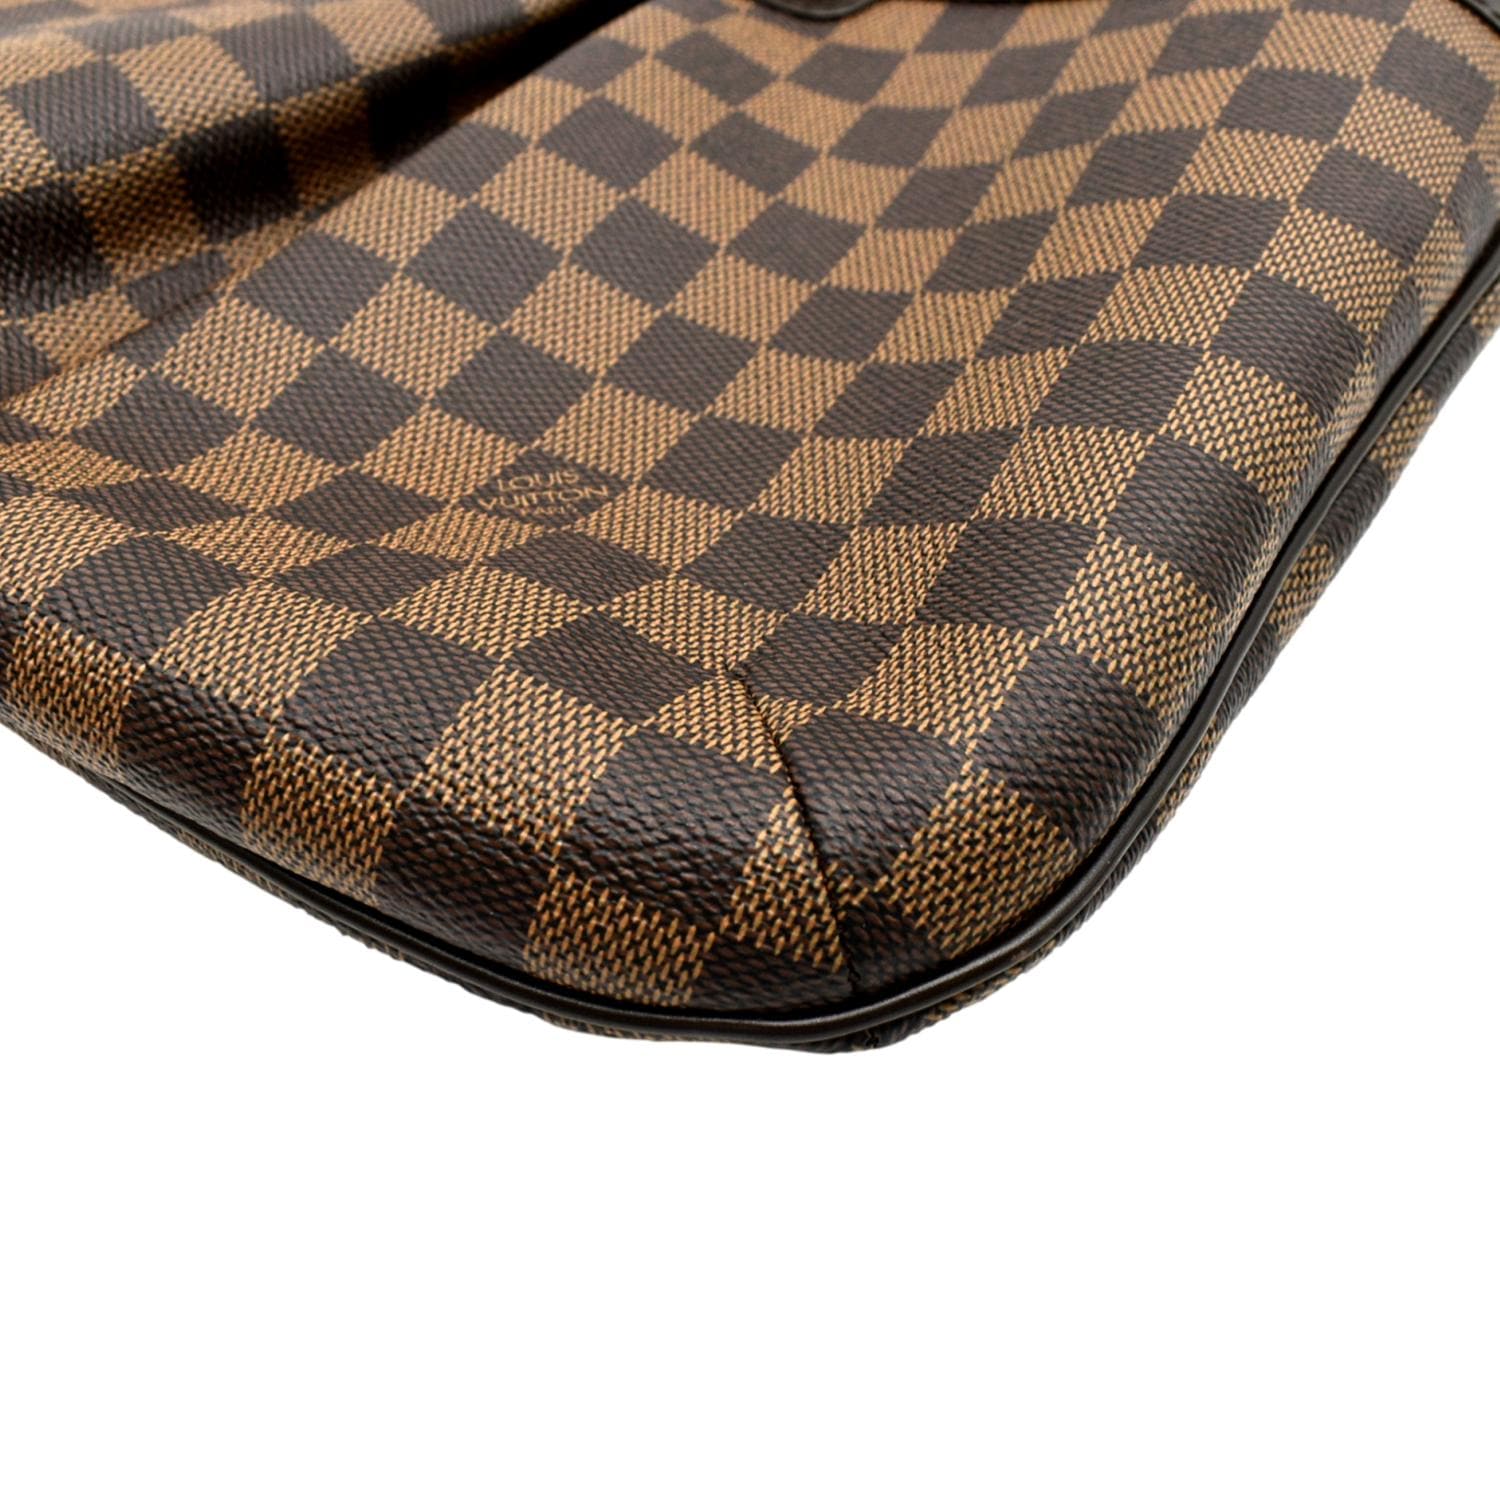 LOUIS VUITTON Louis Vuitton Damier Bloomsbury PM Shoulder Bag N42251